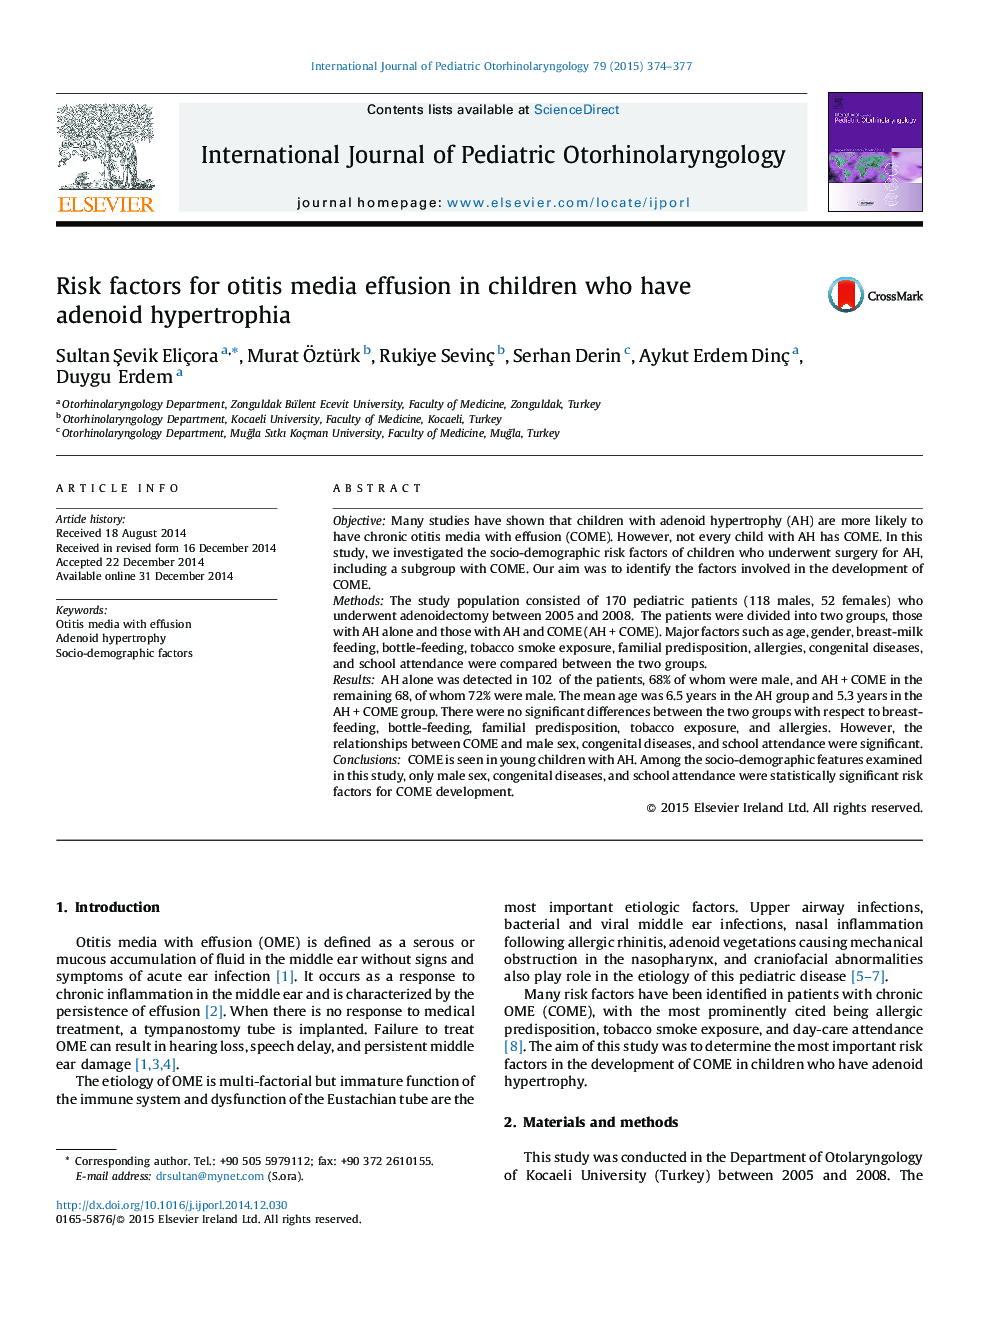 Risk factors for otitis media effusion in children who have adenoid hypertrophia